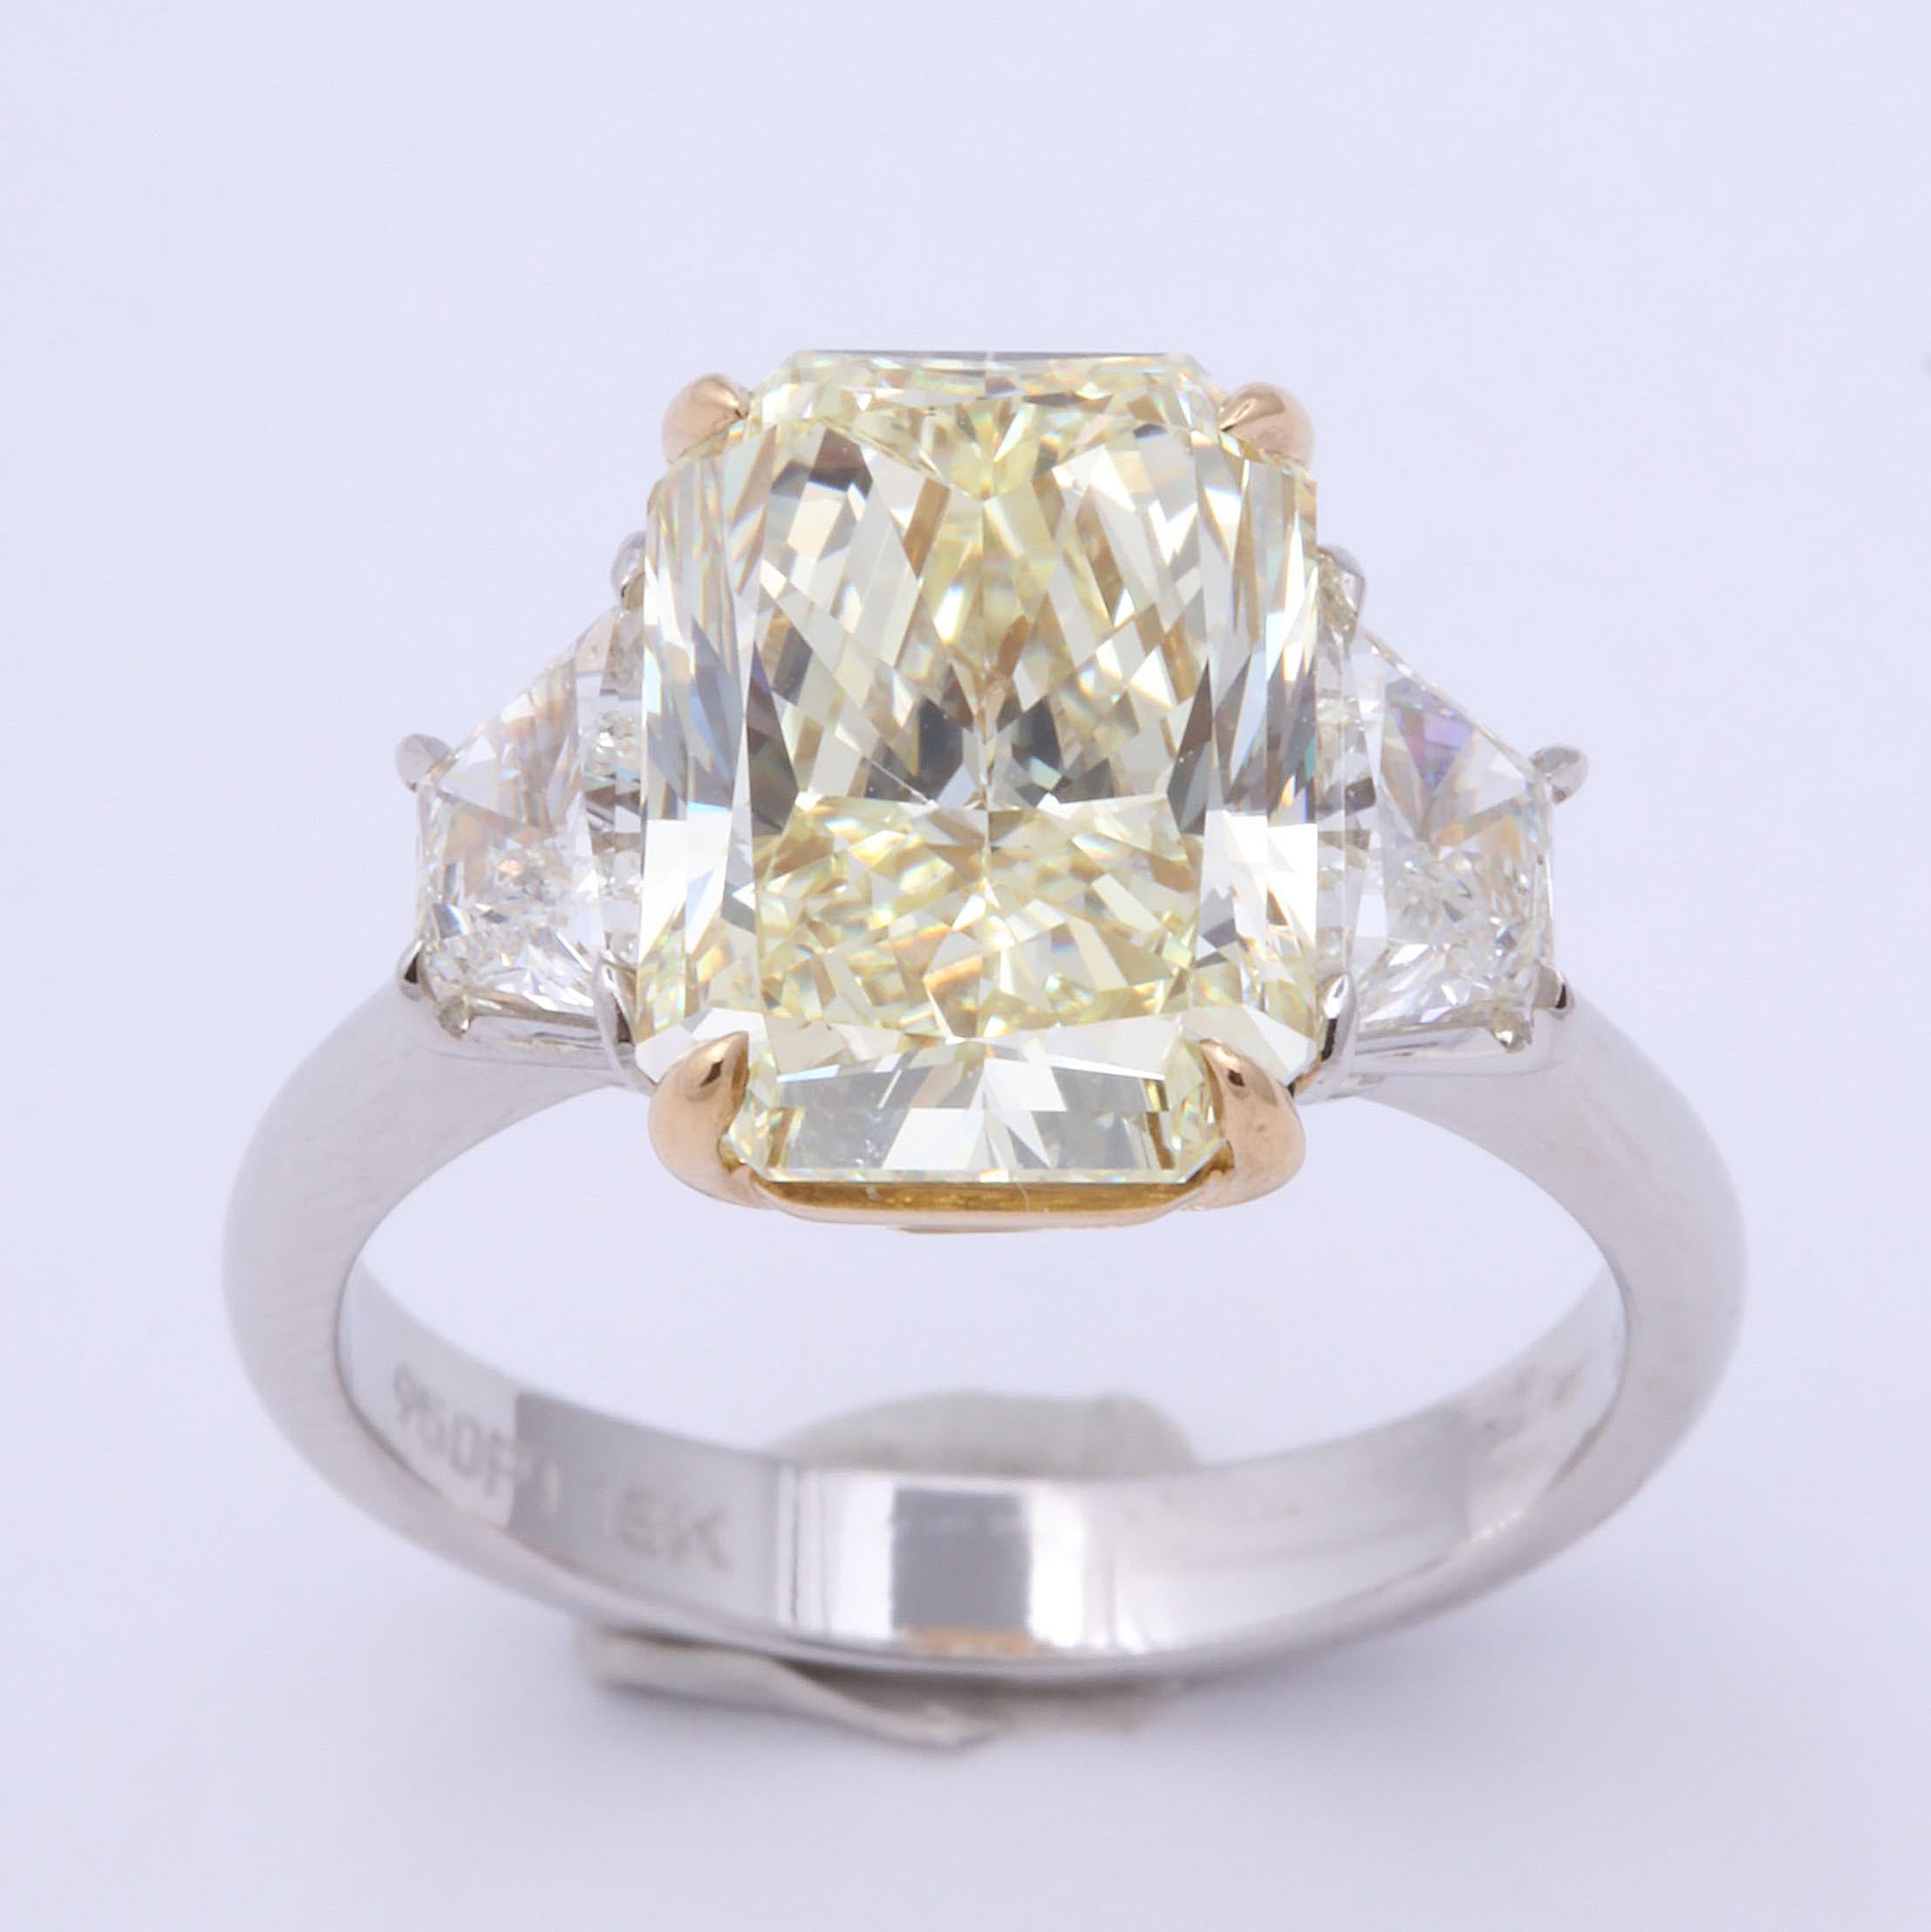 Women's 5 Carat Radiant Cut Yellow Diamond Ring GIA Certified